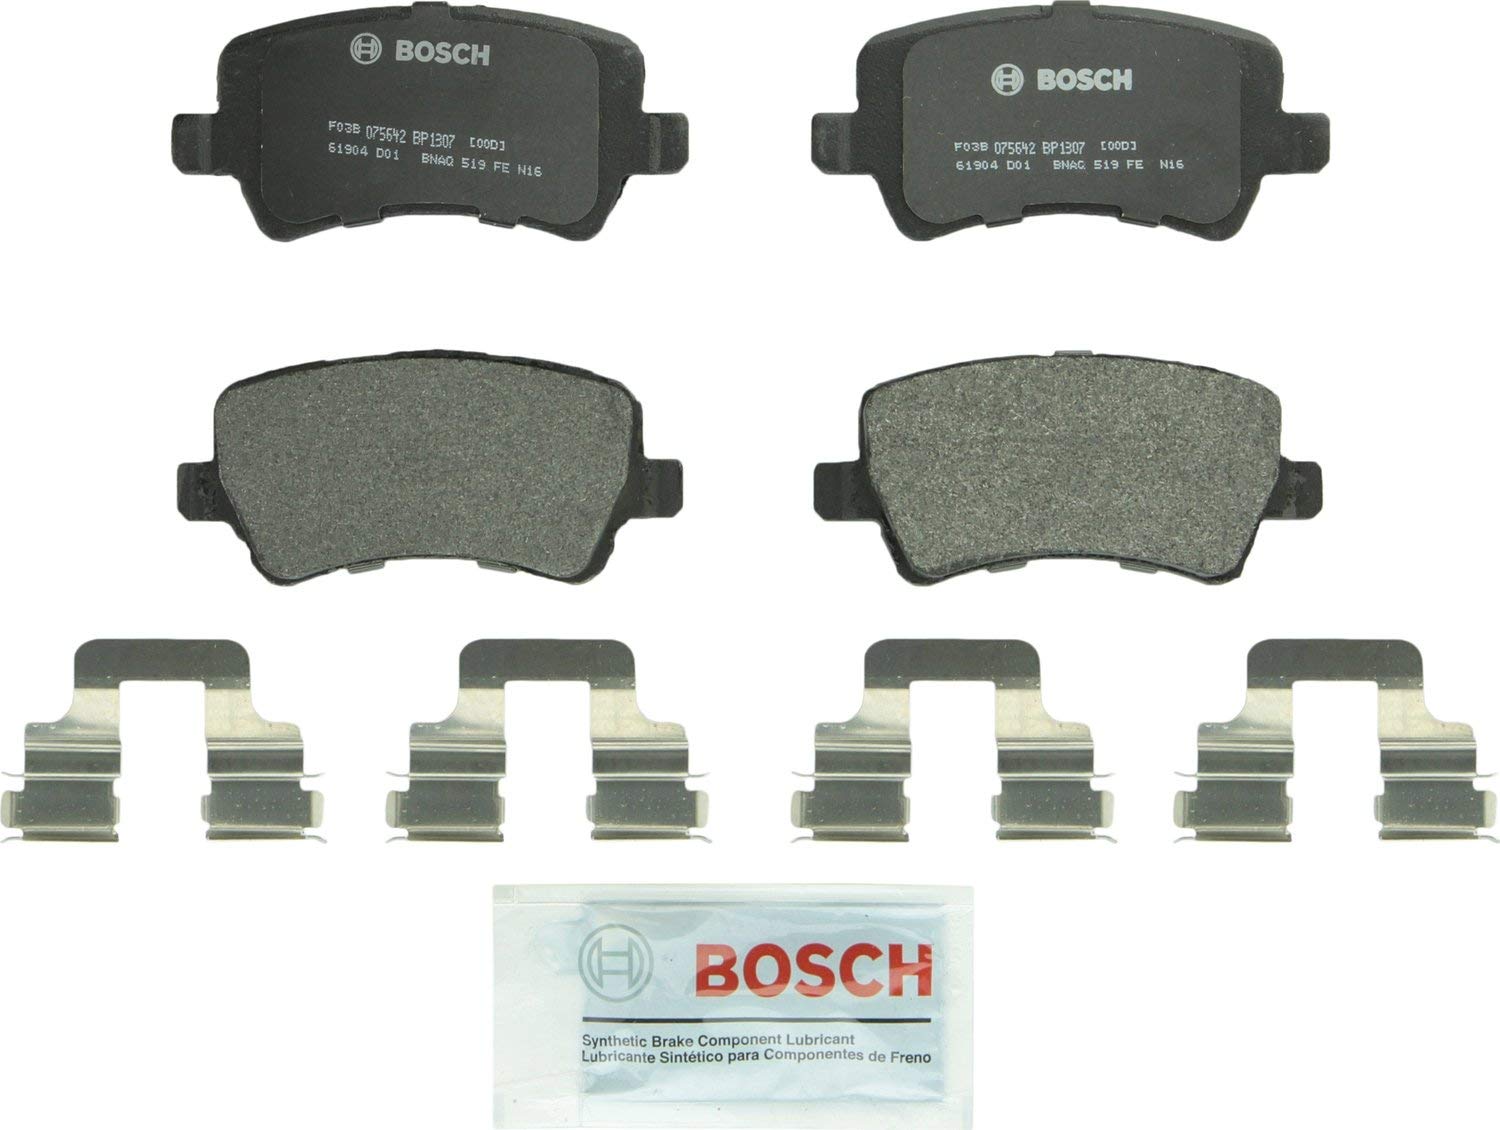 Bosch BP1307 QuietCast Premium Semi-Metallic Disc Brake Pad Set For: Land Rover Range Rover Evoque; Volvo S60, S60 Cross Country, S80, V60, V60 Cross Country, V70, XC60, XC70, Rear